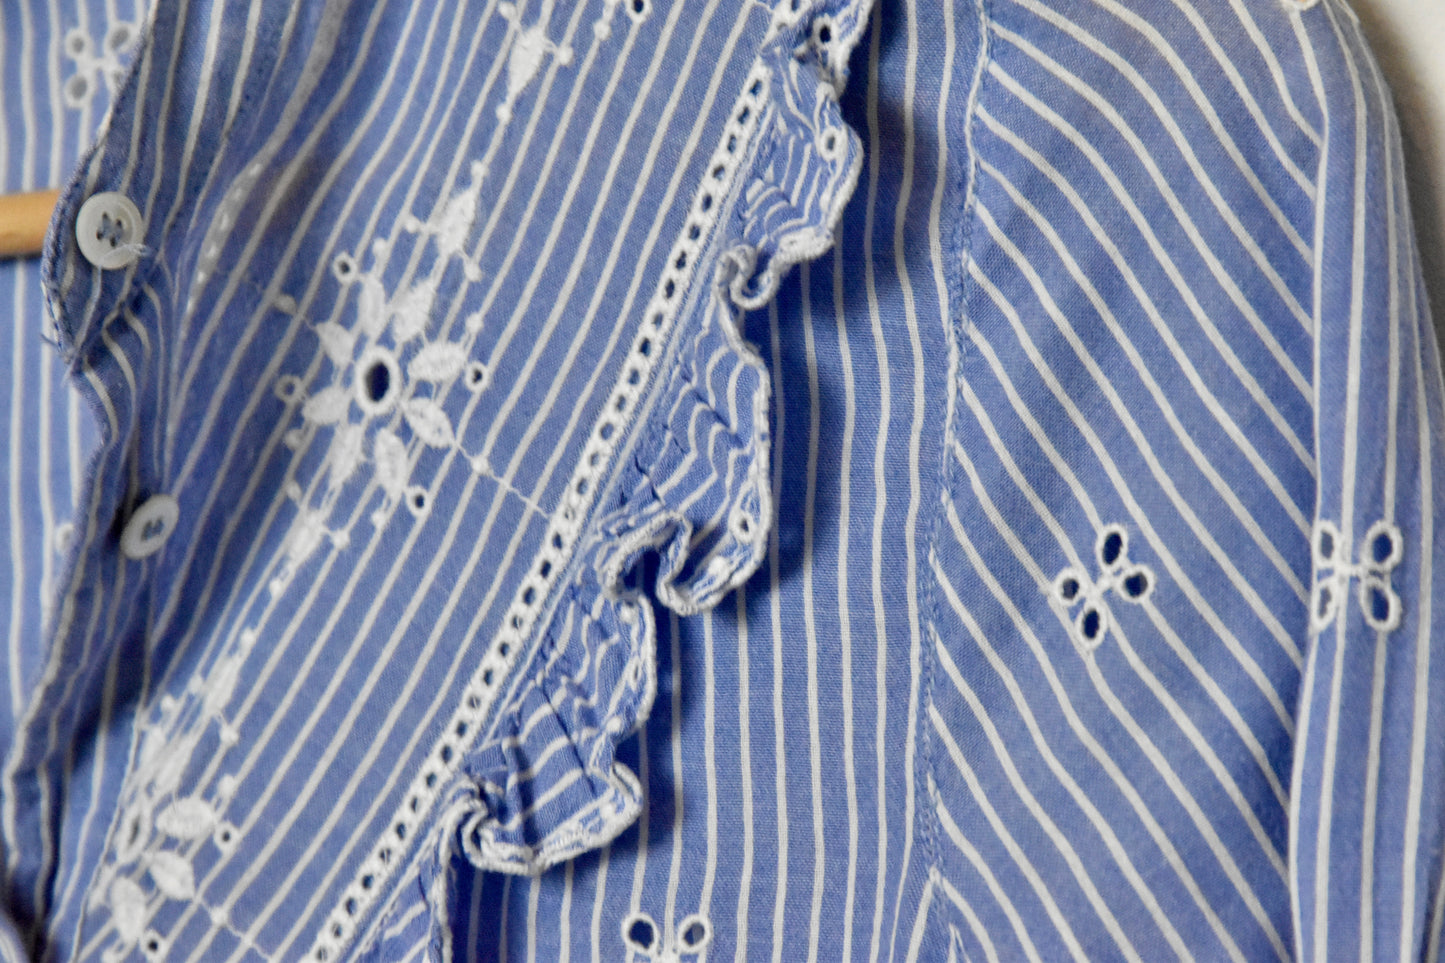 Sézane embroidered shirt